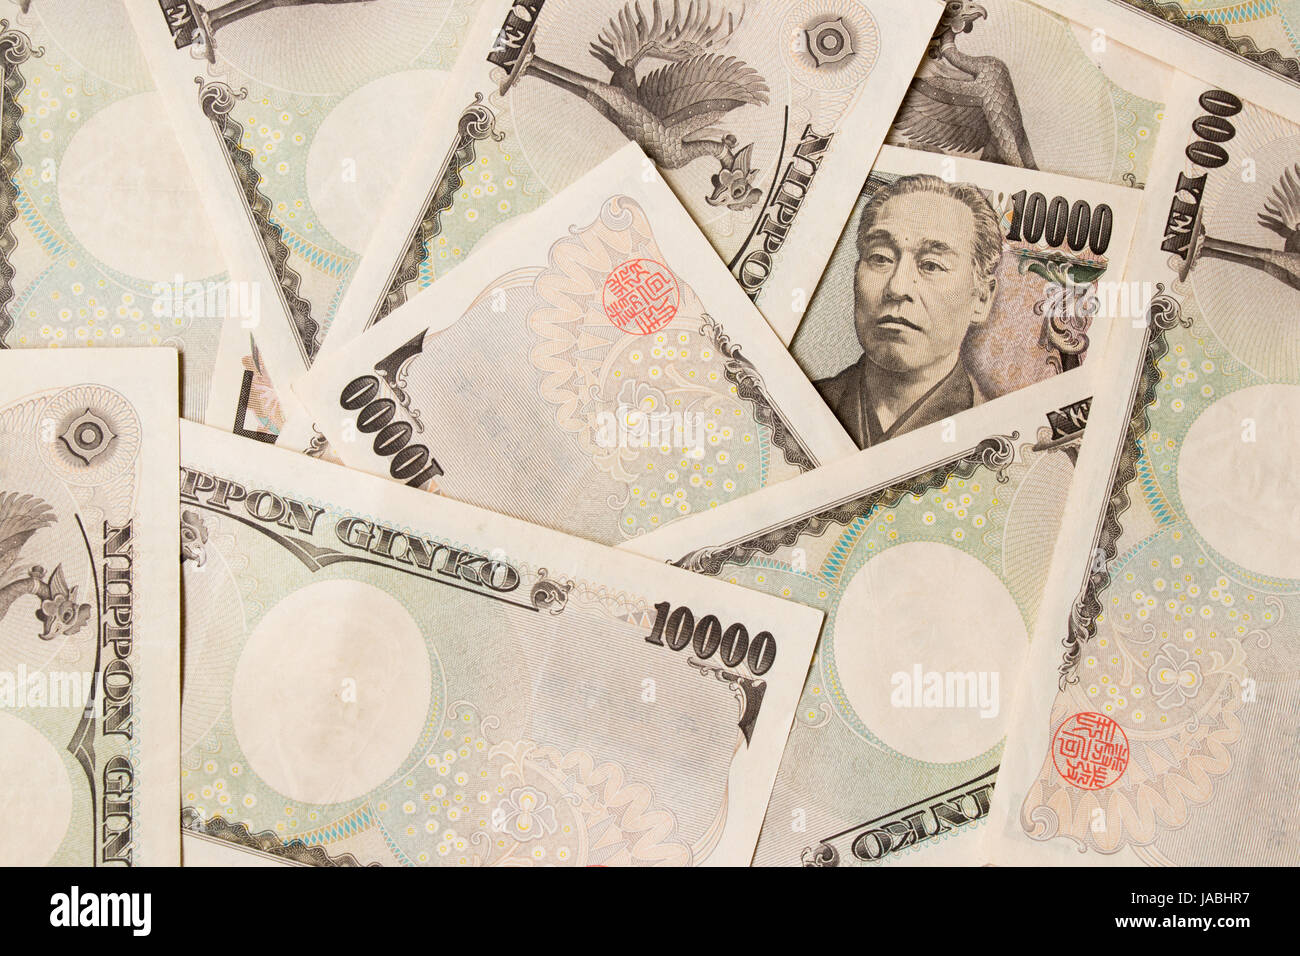 Gruppo della banca giapponese nota 10000 yen sfondo Foto Stock